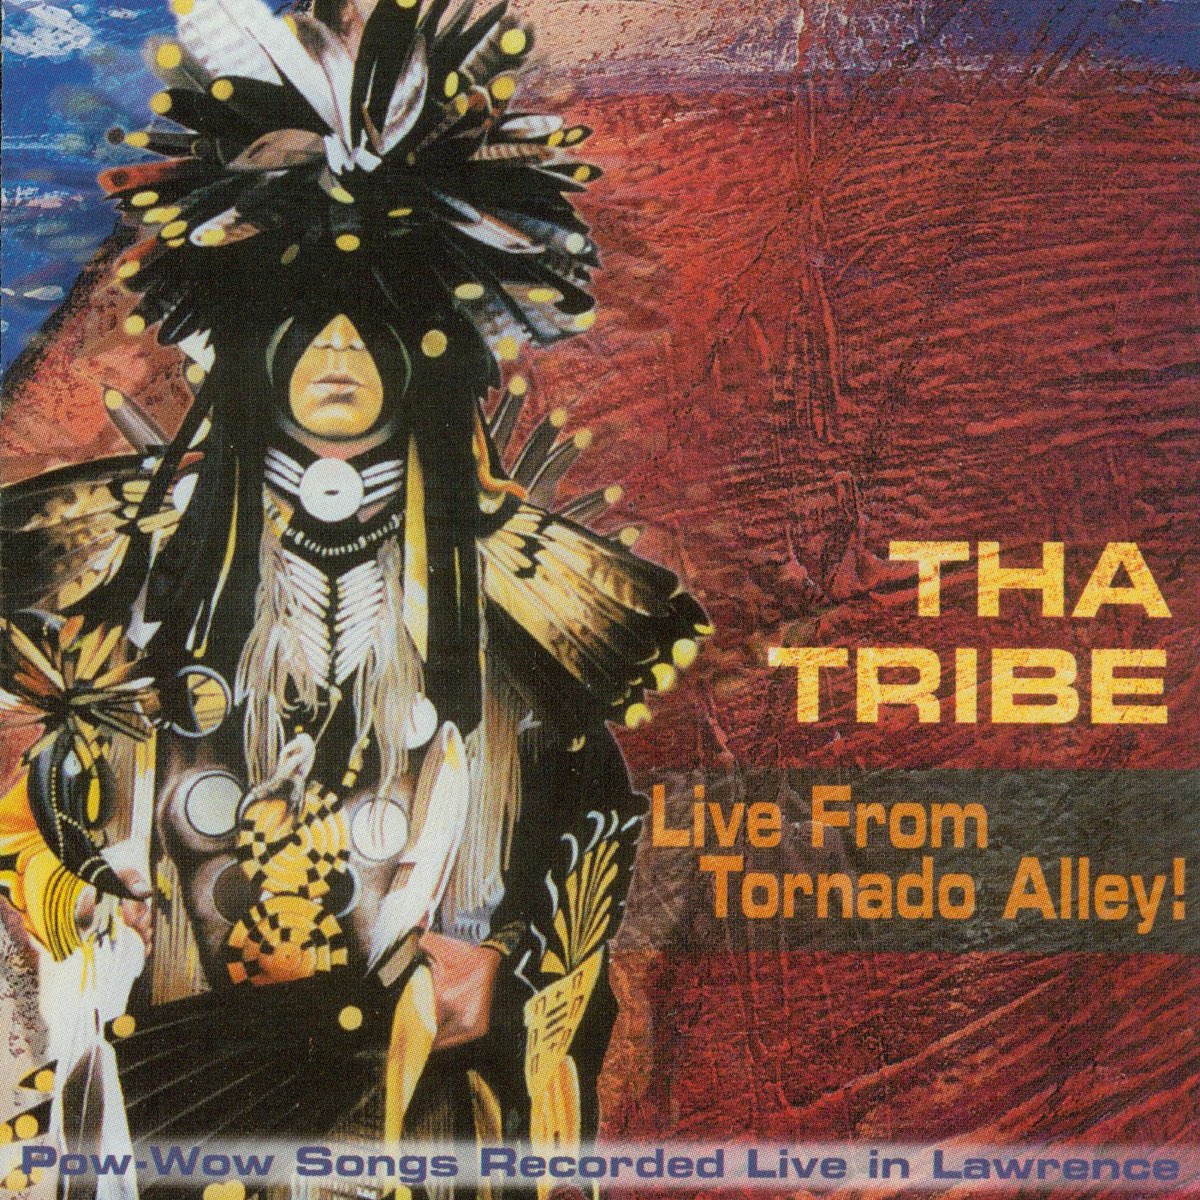 Песня wow wow. Wow wow wow песня. Live with Tribe!. Песня tribes